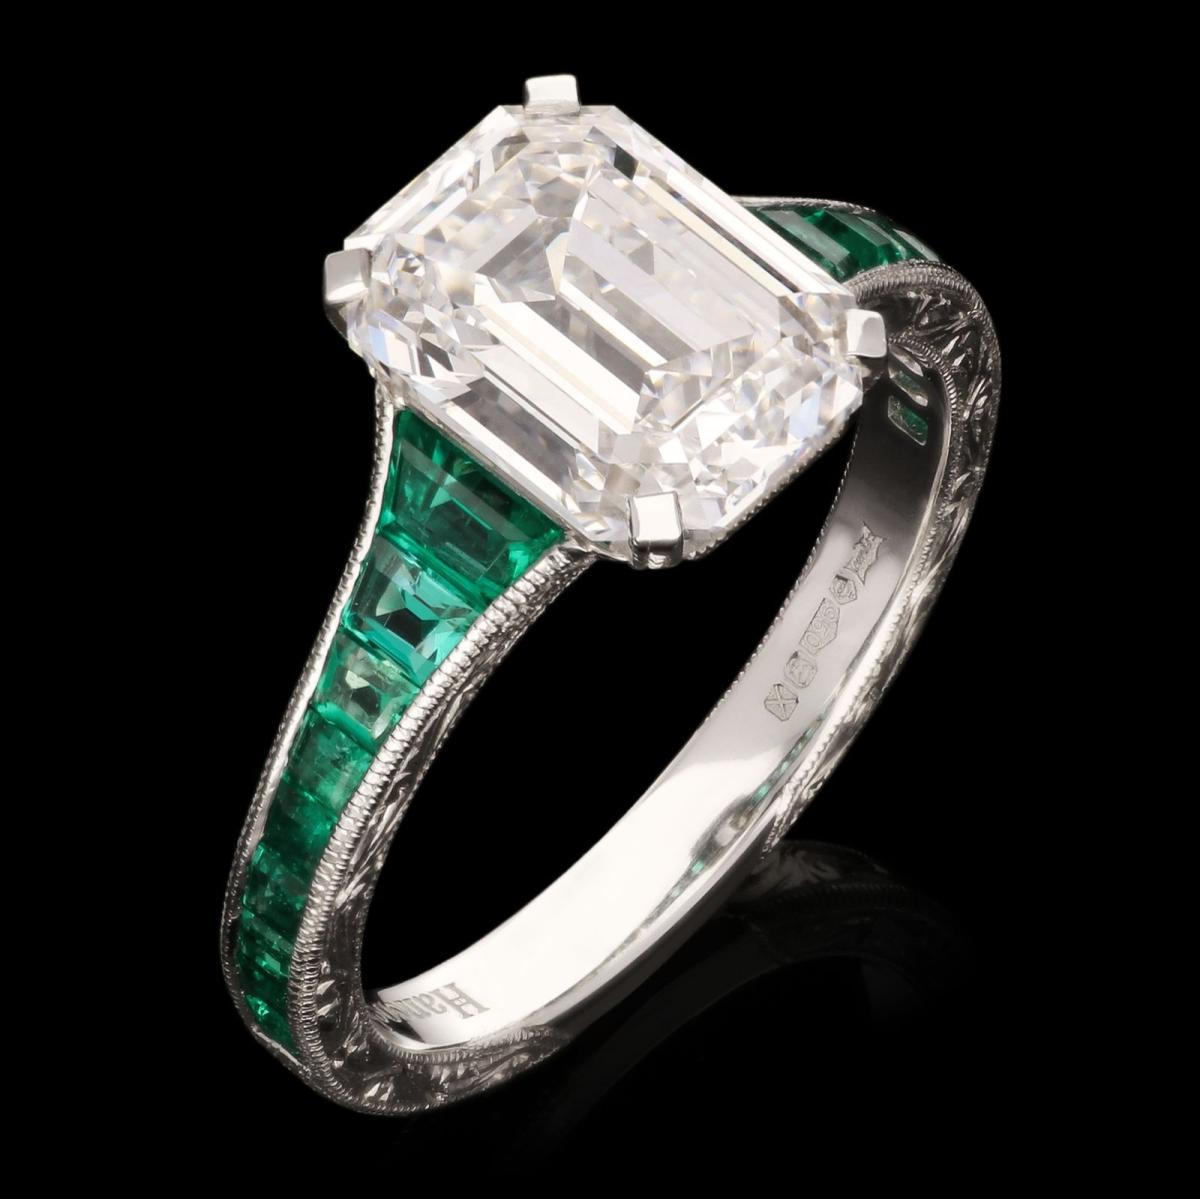 Hancocks 2.85ct Emerald-Cut Diamond Ring With Calibre Cut Emerald Band In Platinum